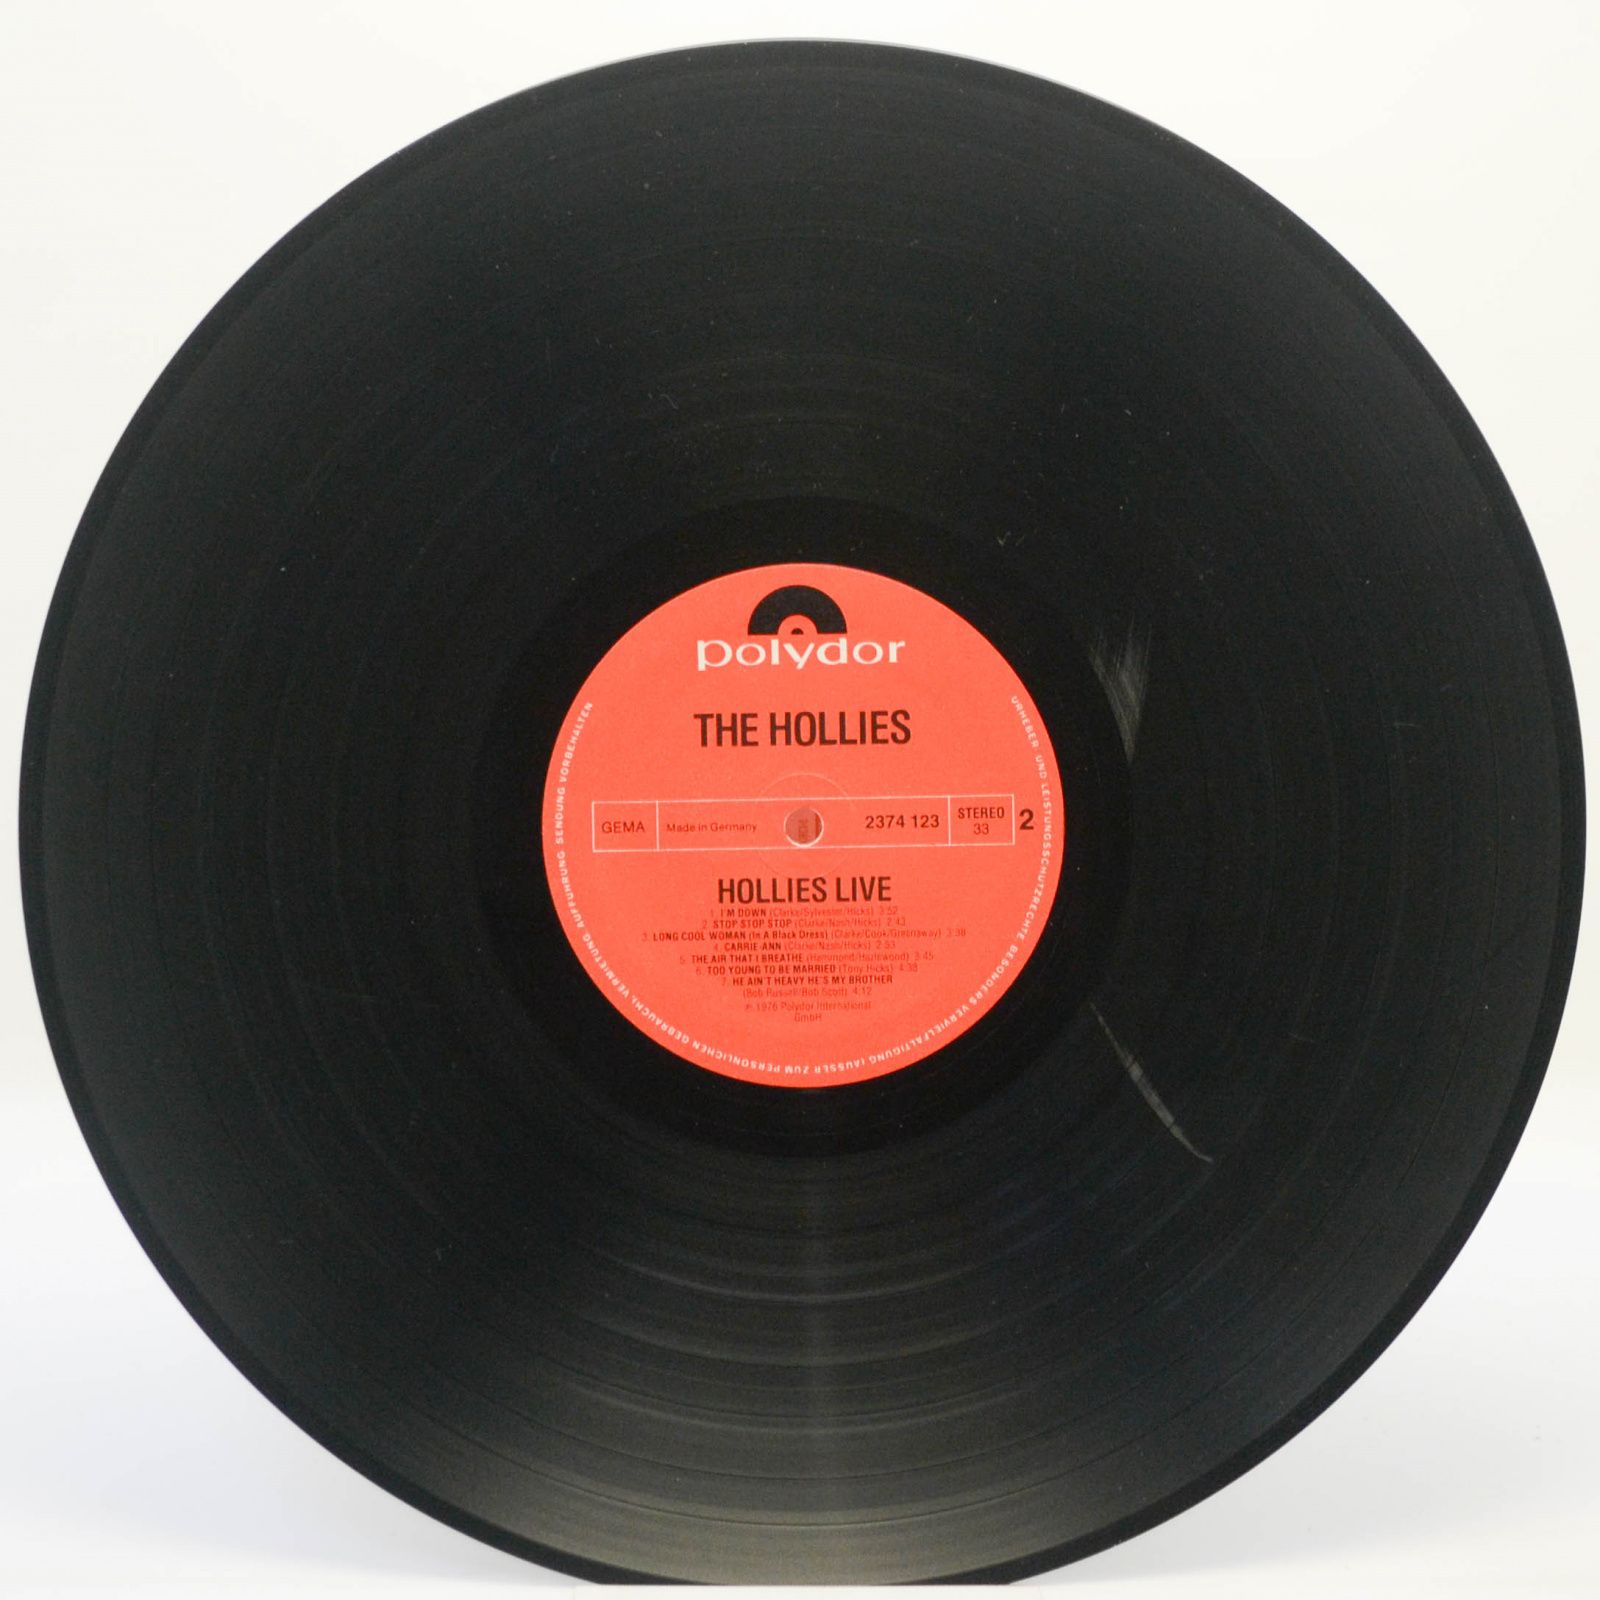 Hollies — Hollies Live, 1976